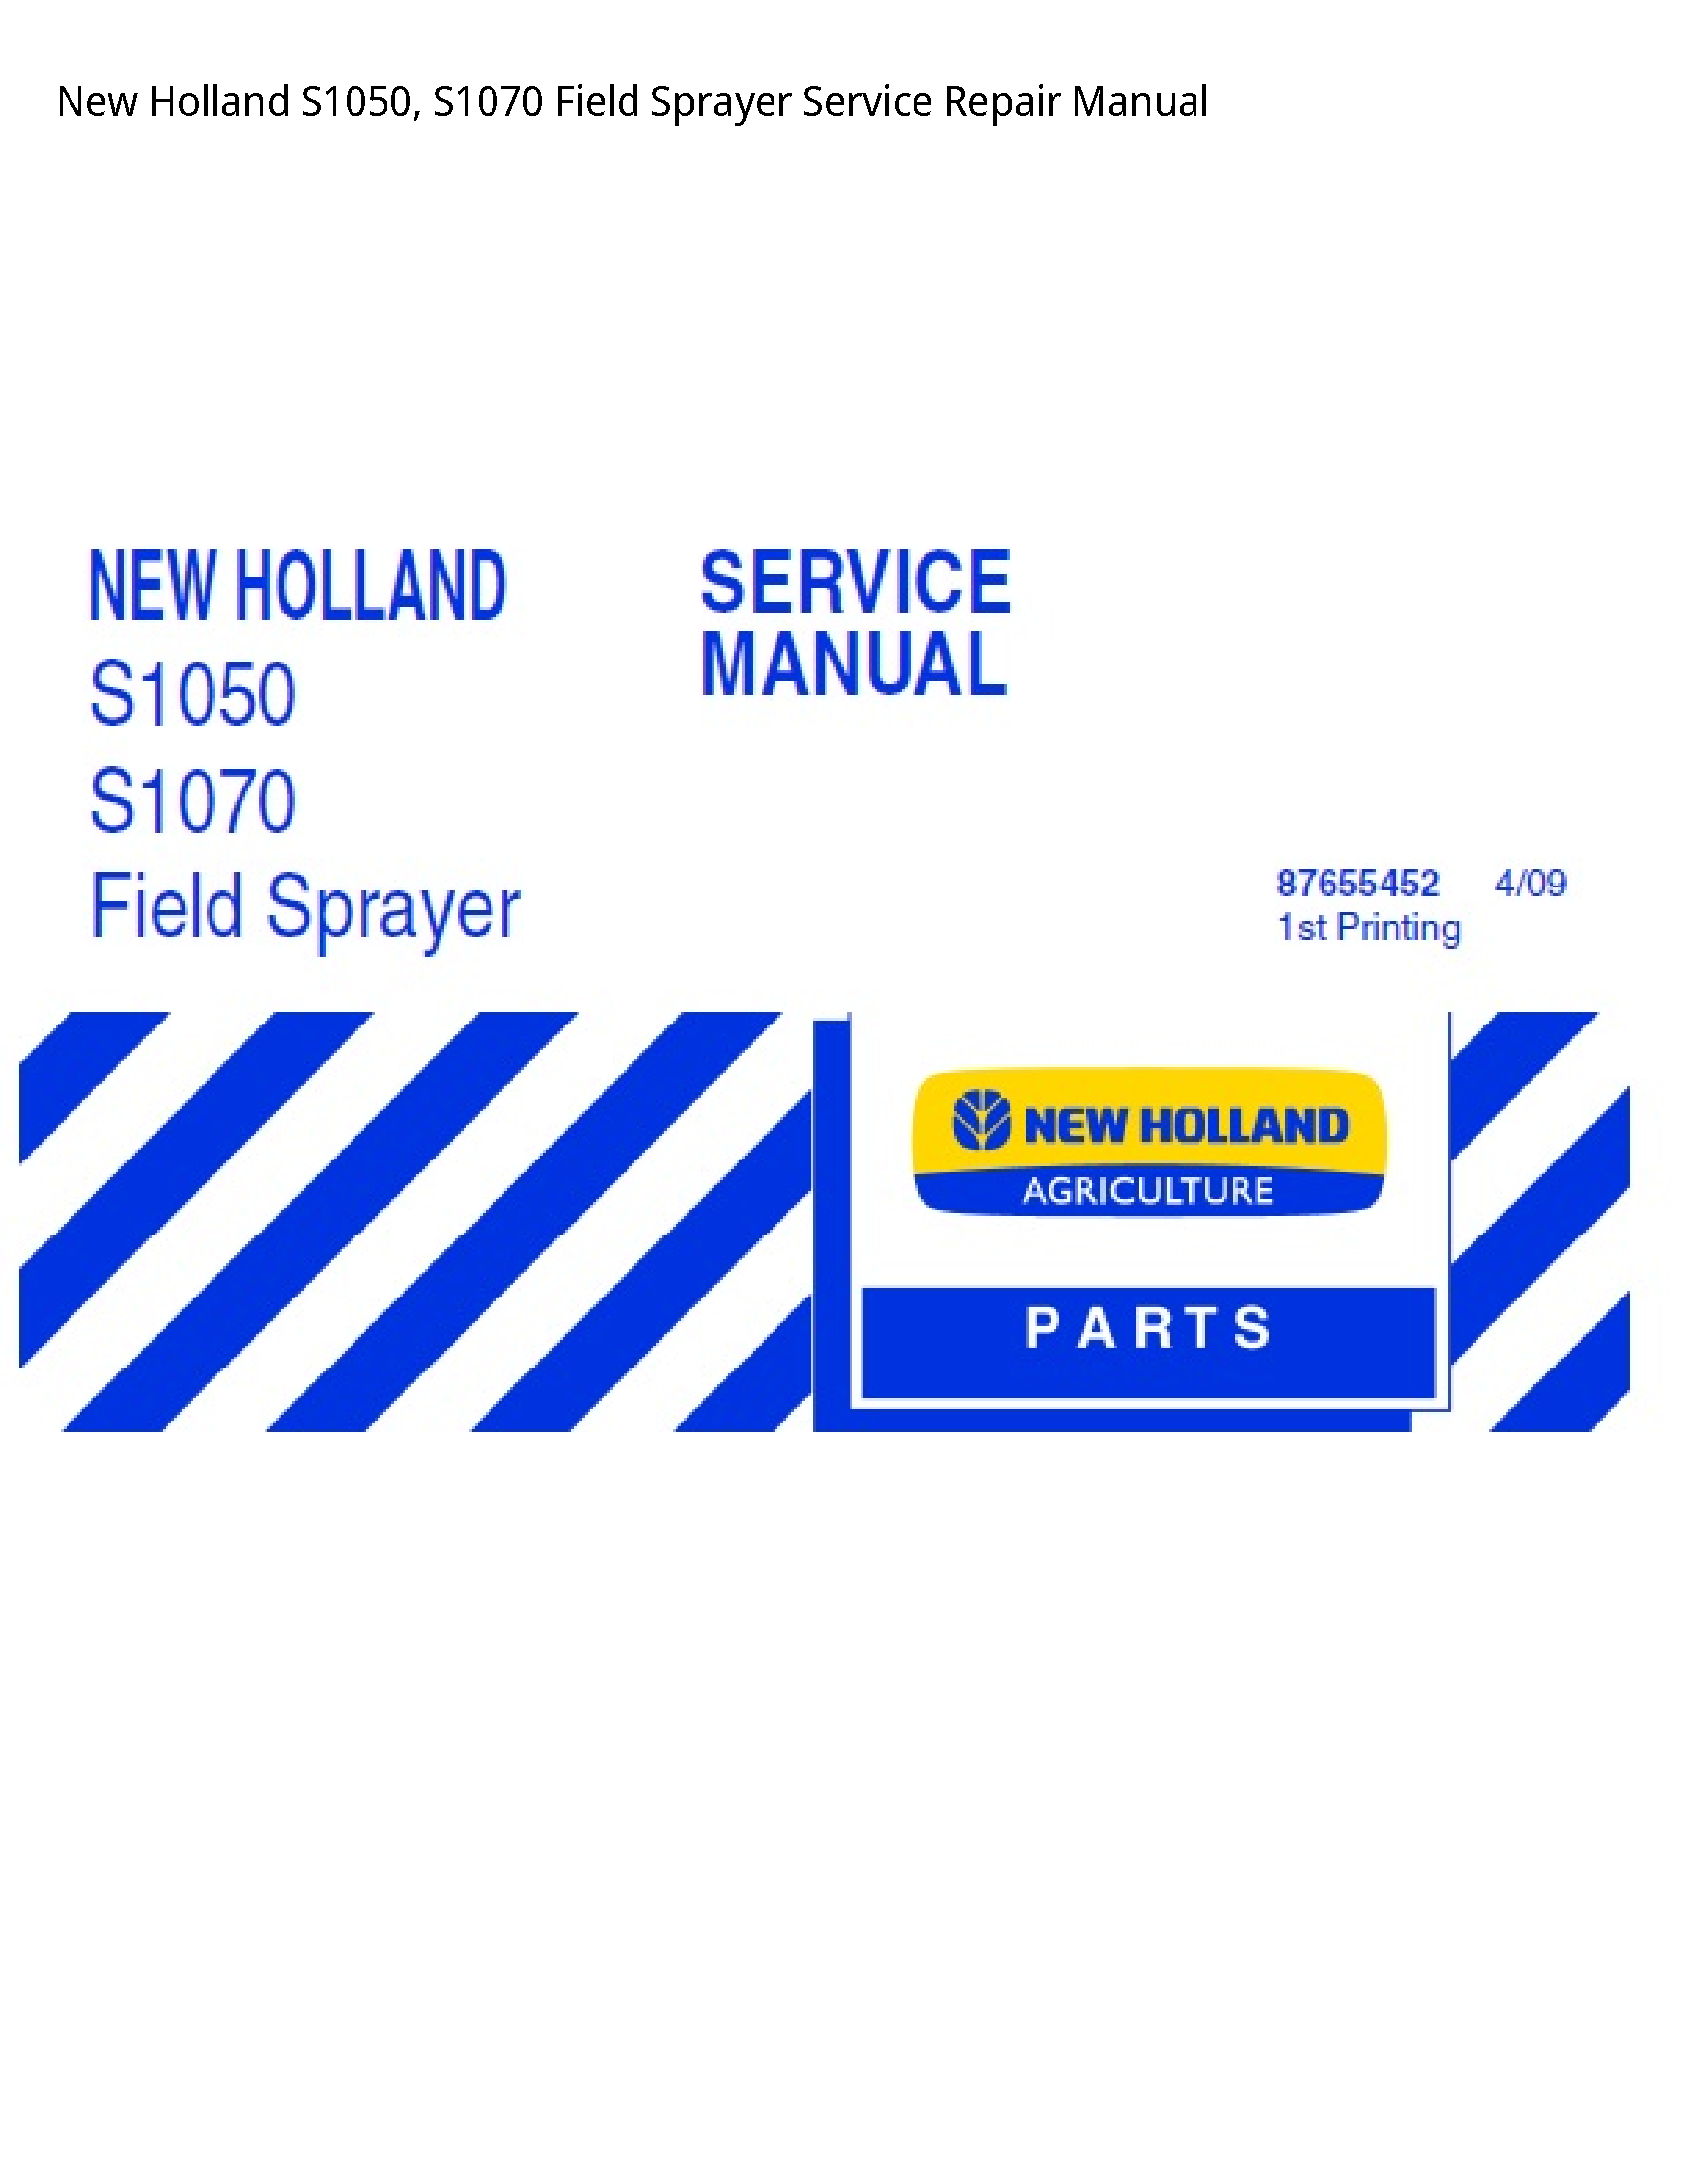 New Holland S1050 Field Sprayer manual